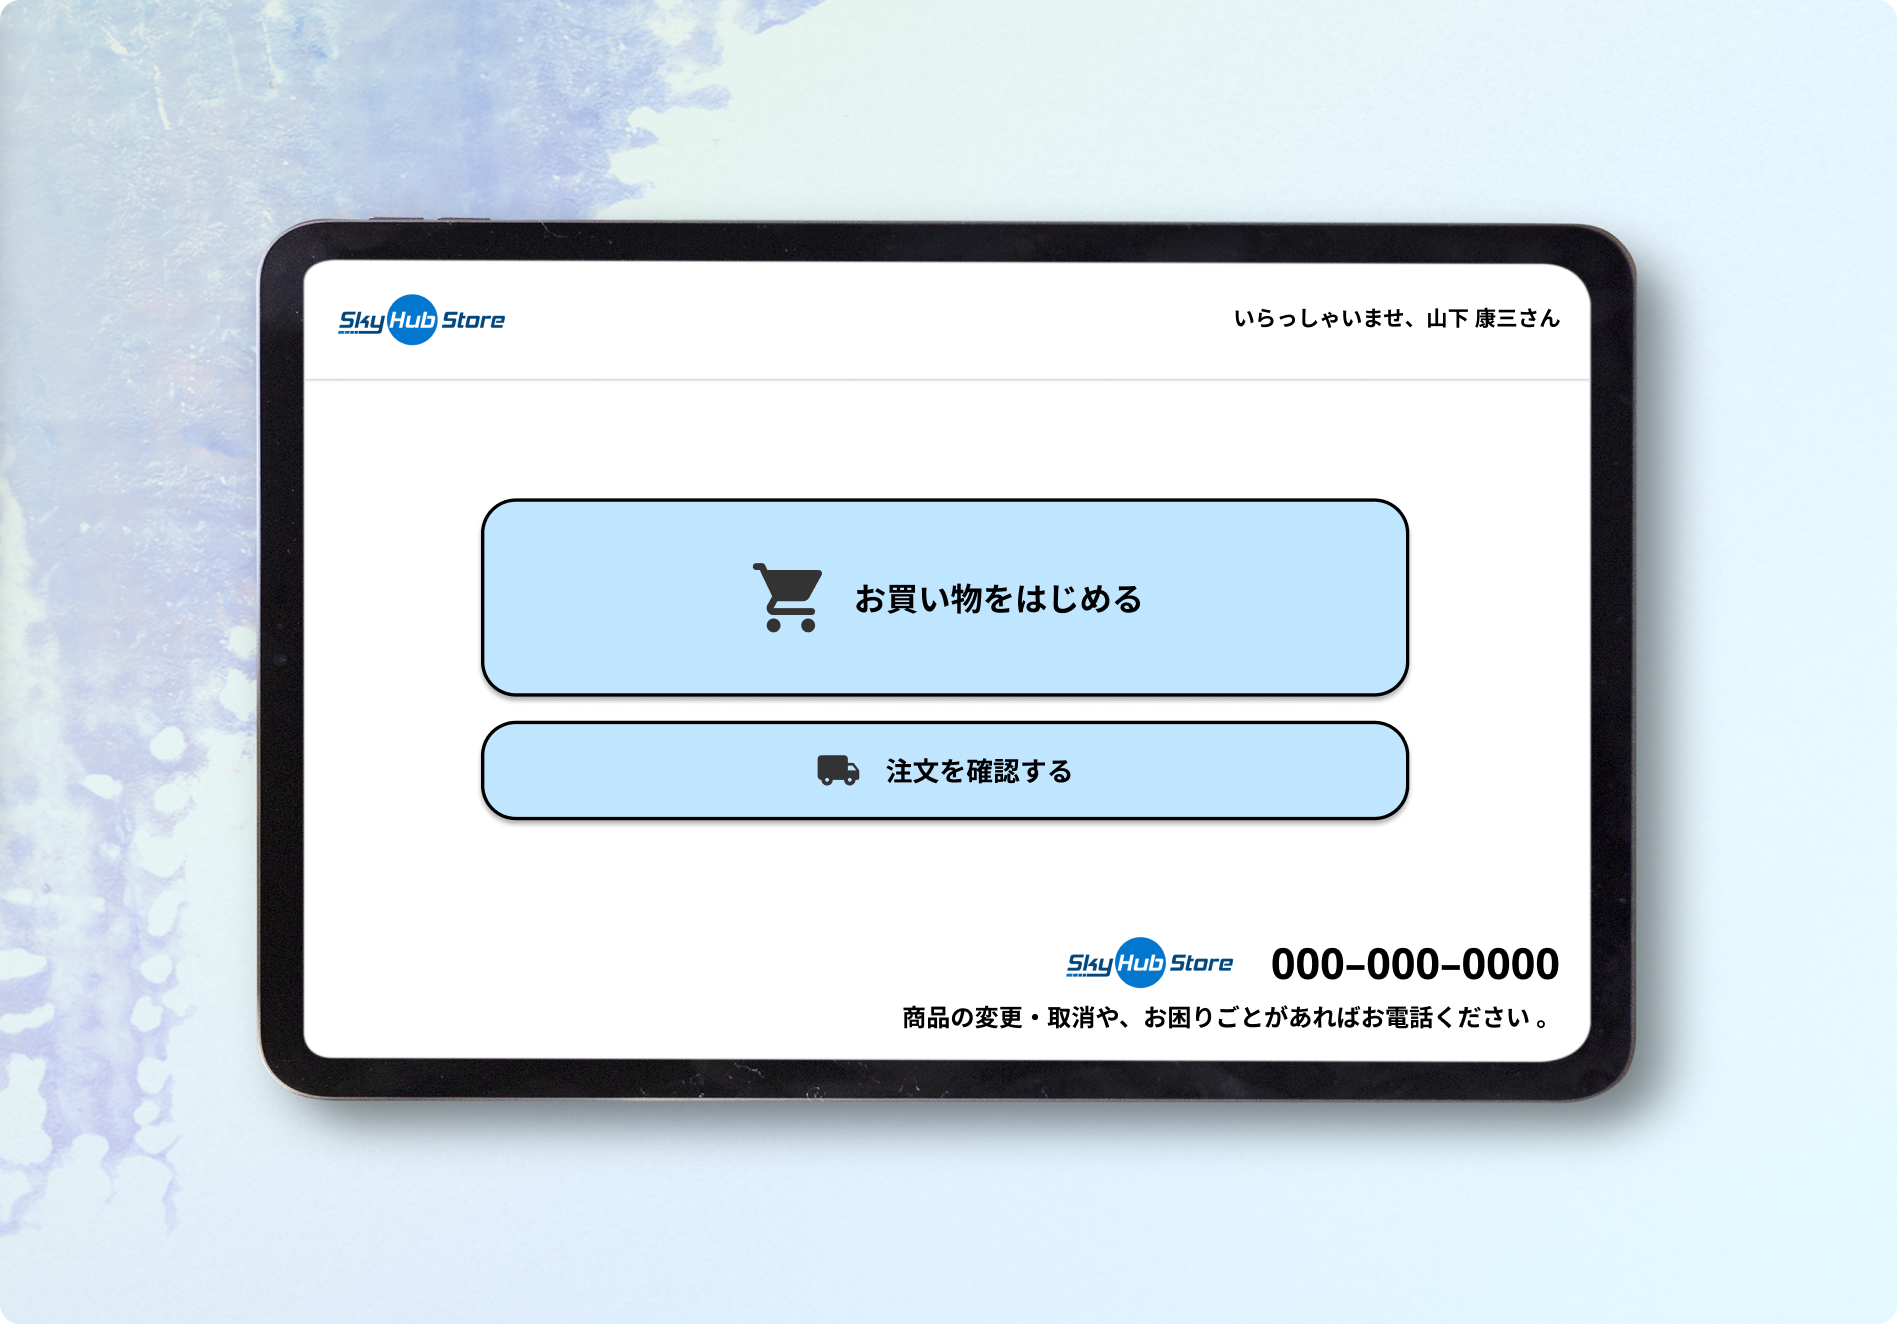 Skyhub tablet screen, Image by rawpixel.com